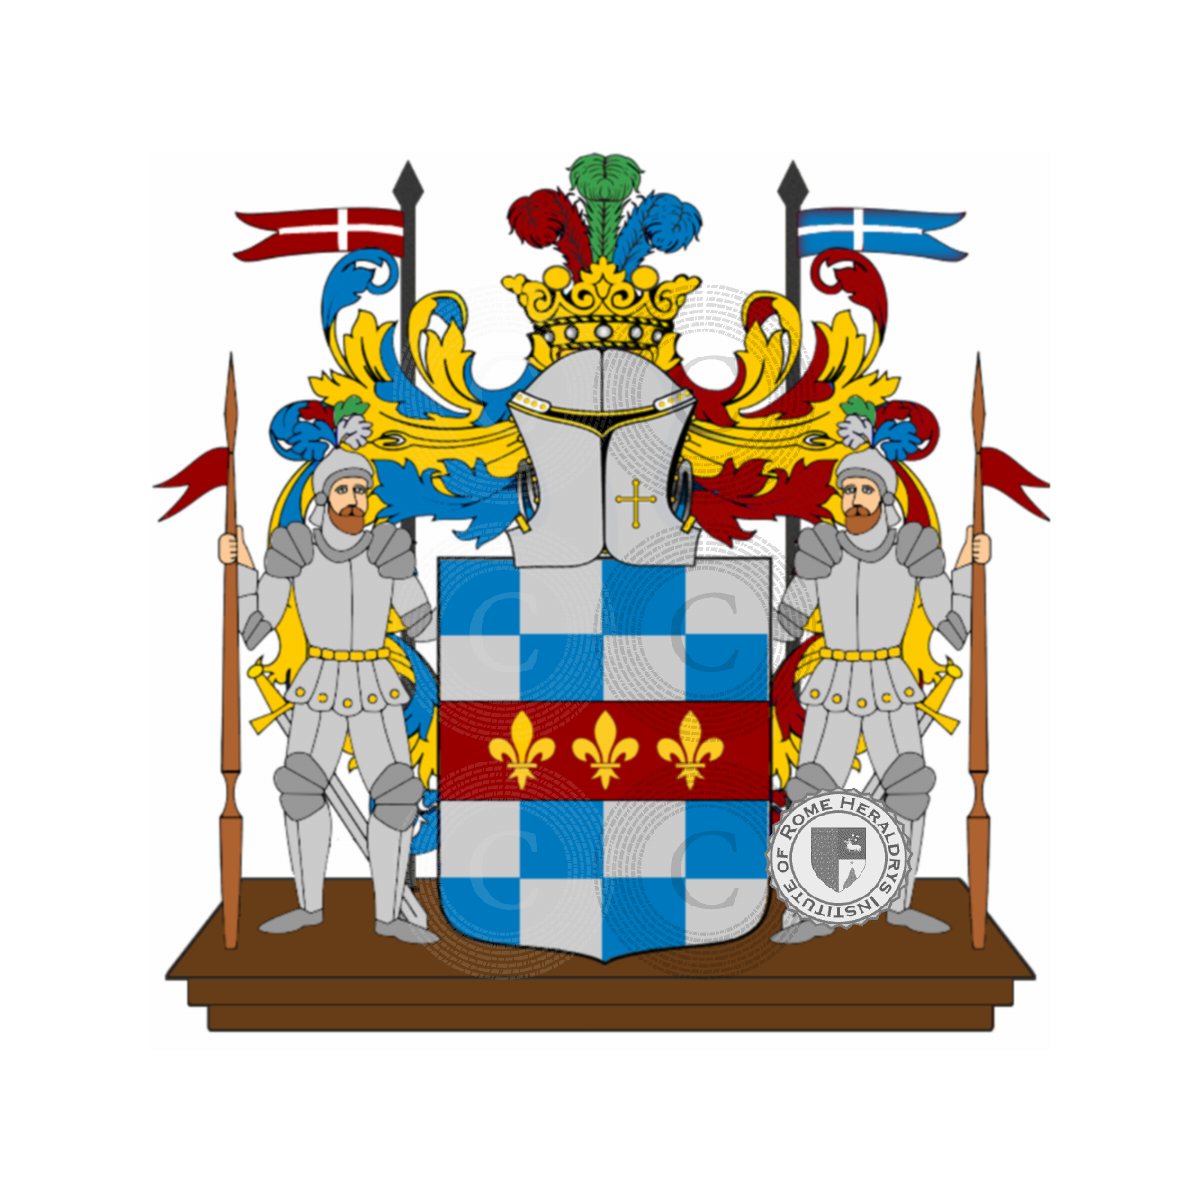 Coat of arms of familytamoglia (veneto)